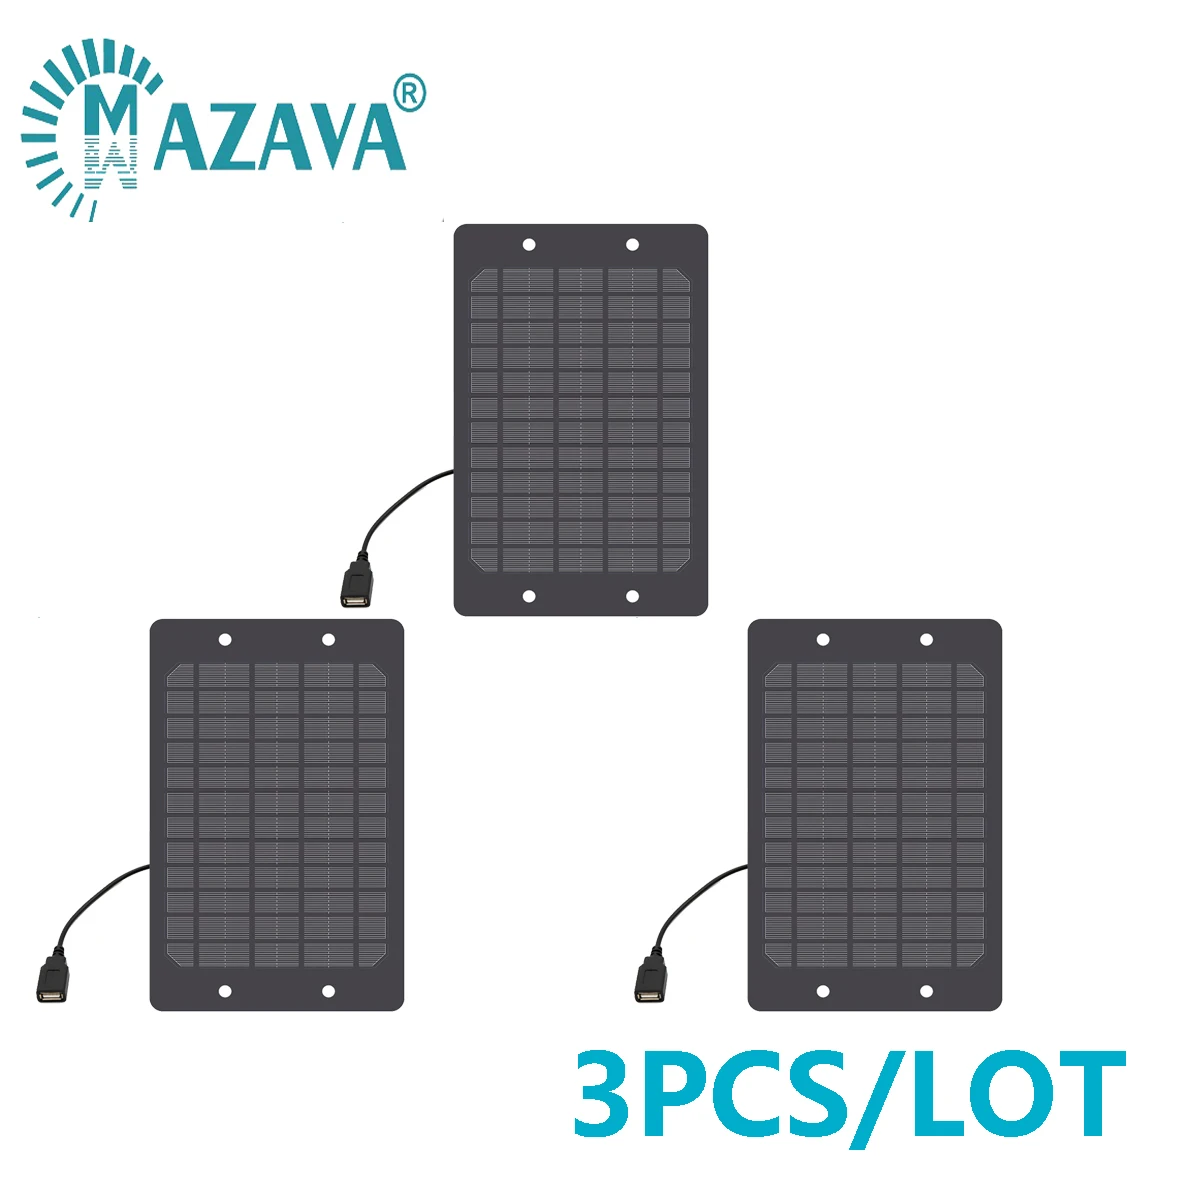 3PCS/LOT 5 V 6 W USB DC Mini monocrystalline PET Solar Panel Small Solar Cell Battery Bicycle Sharing Share DIY Solar Charger